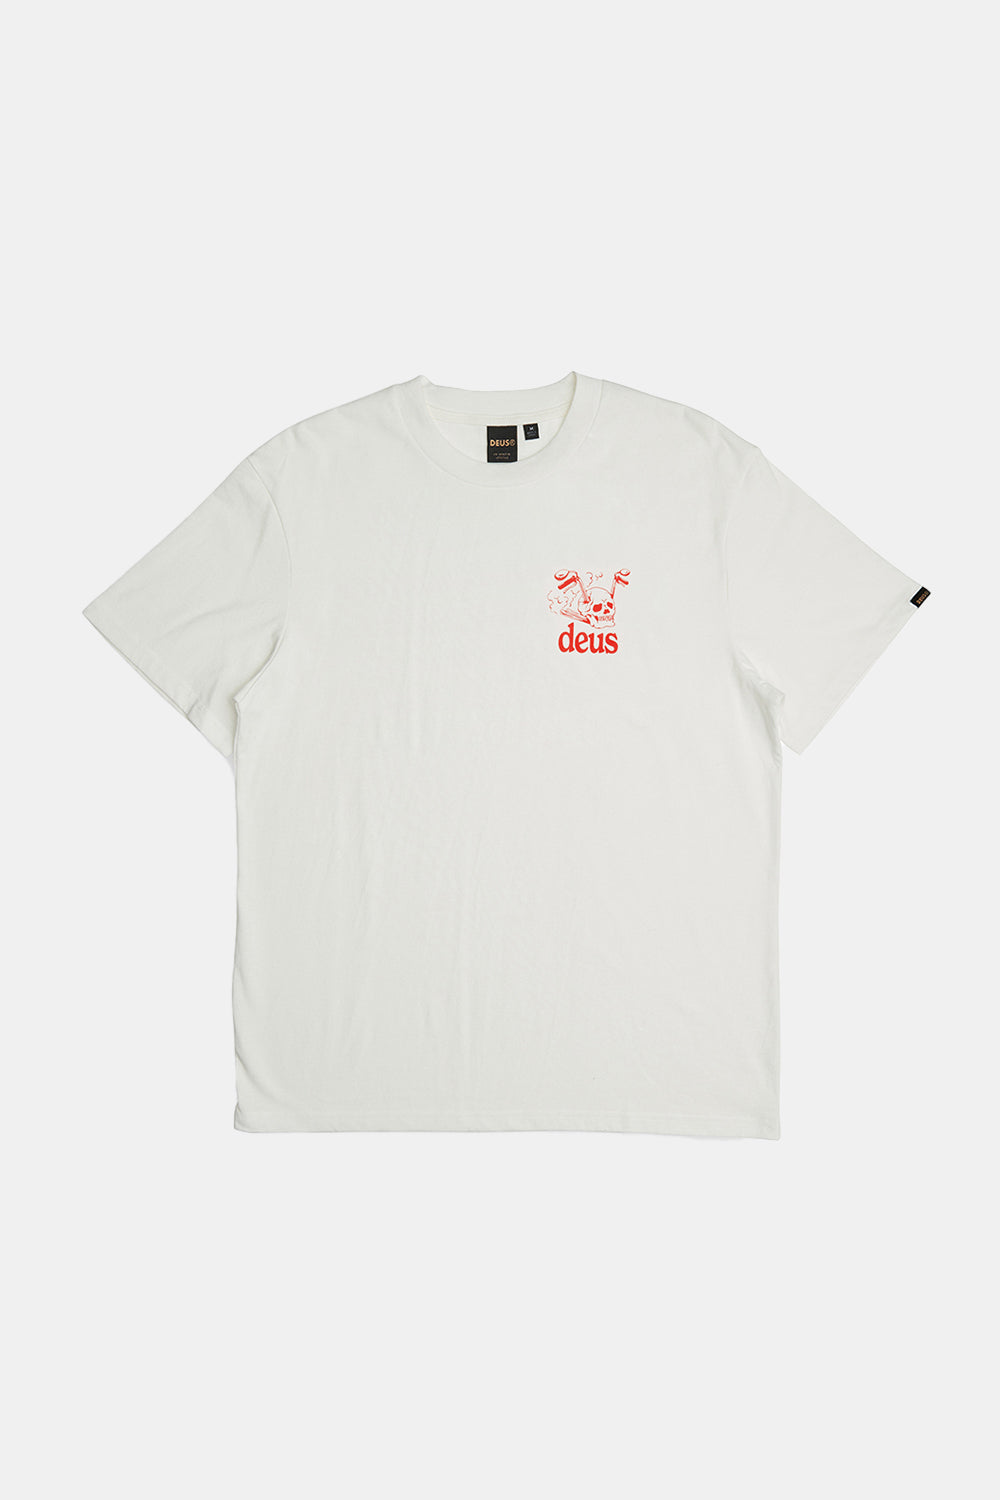 Deus Crossroad T-shirt (Vintage White)